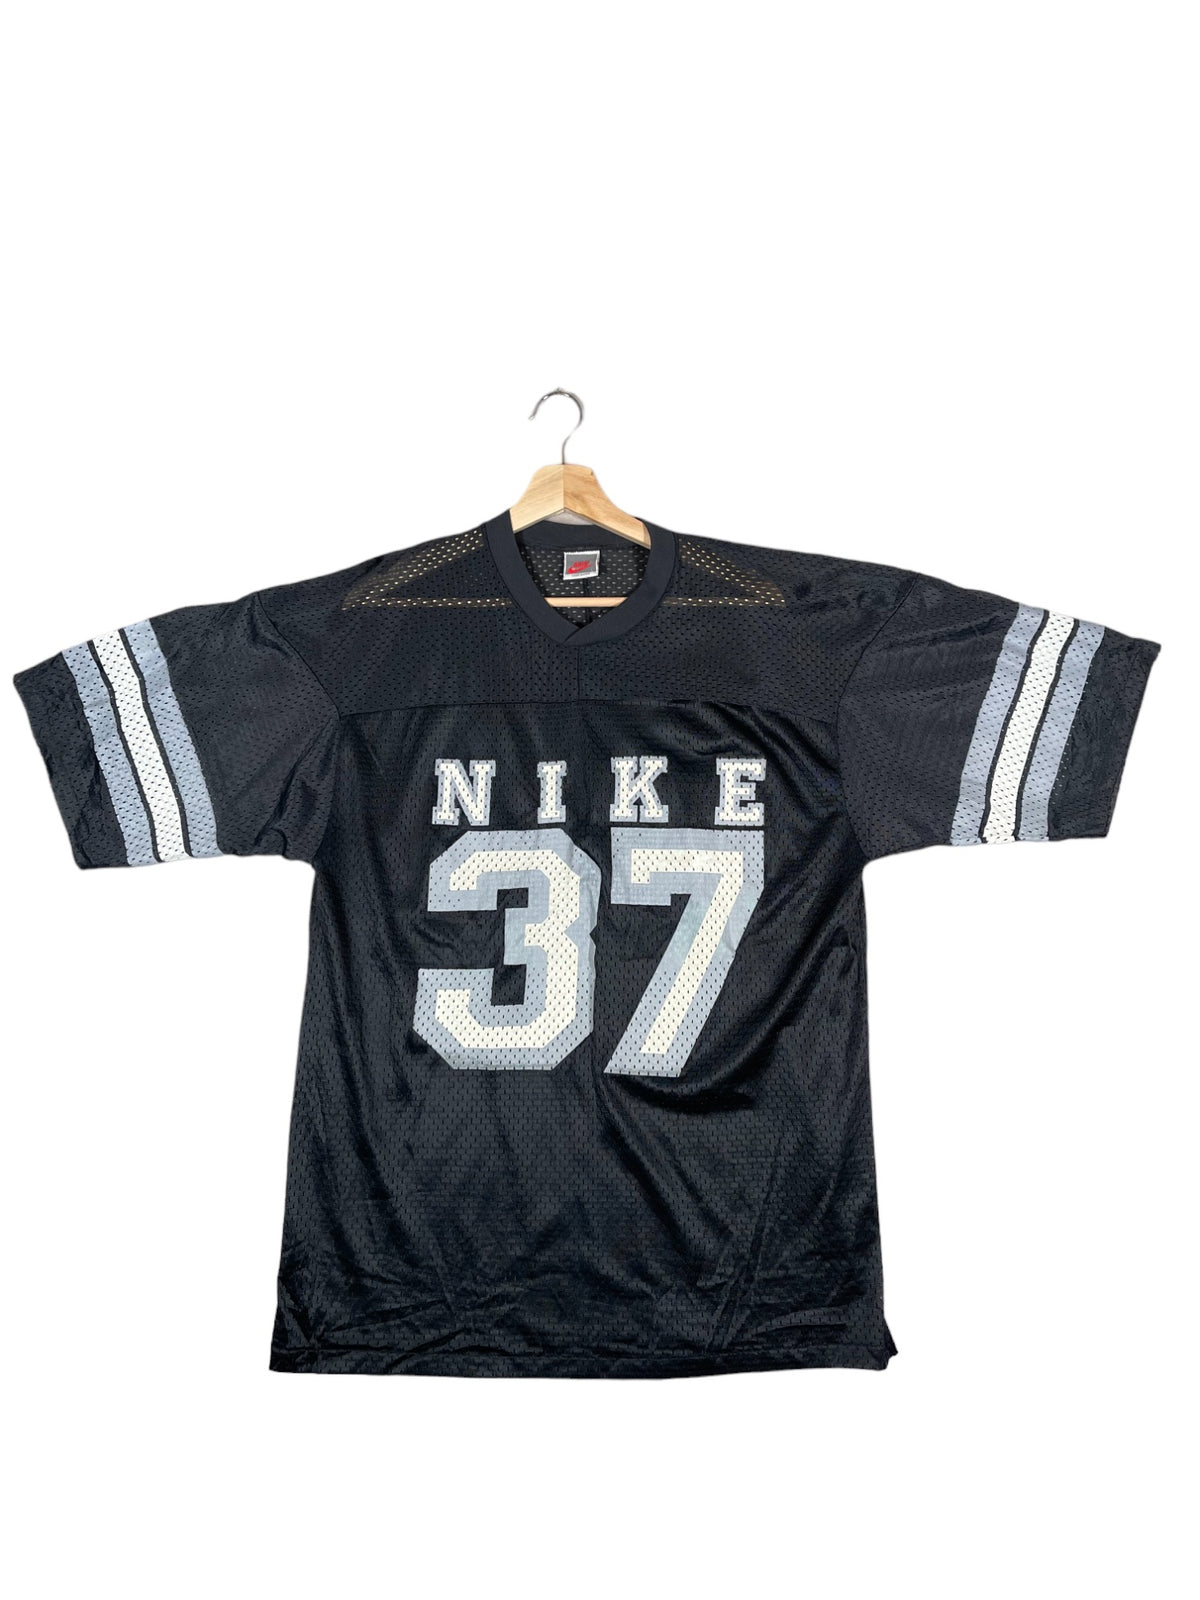 Vintage 1980's Nike Mesh Football Jersey